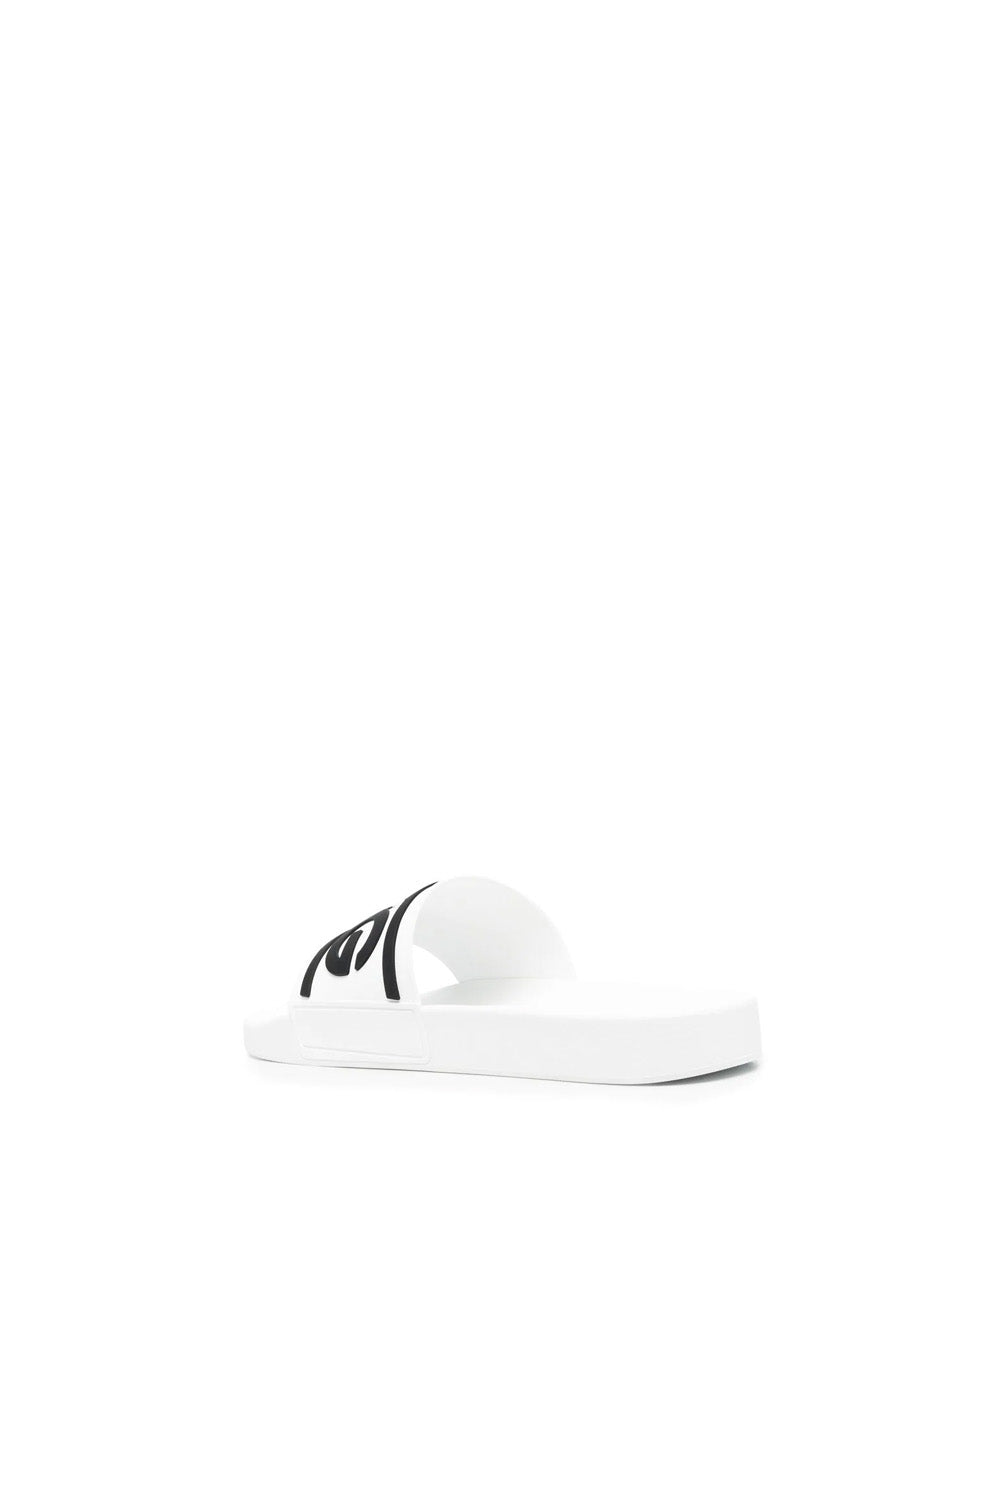 Dolce & Gabbana logo-print beach sliders white